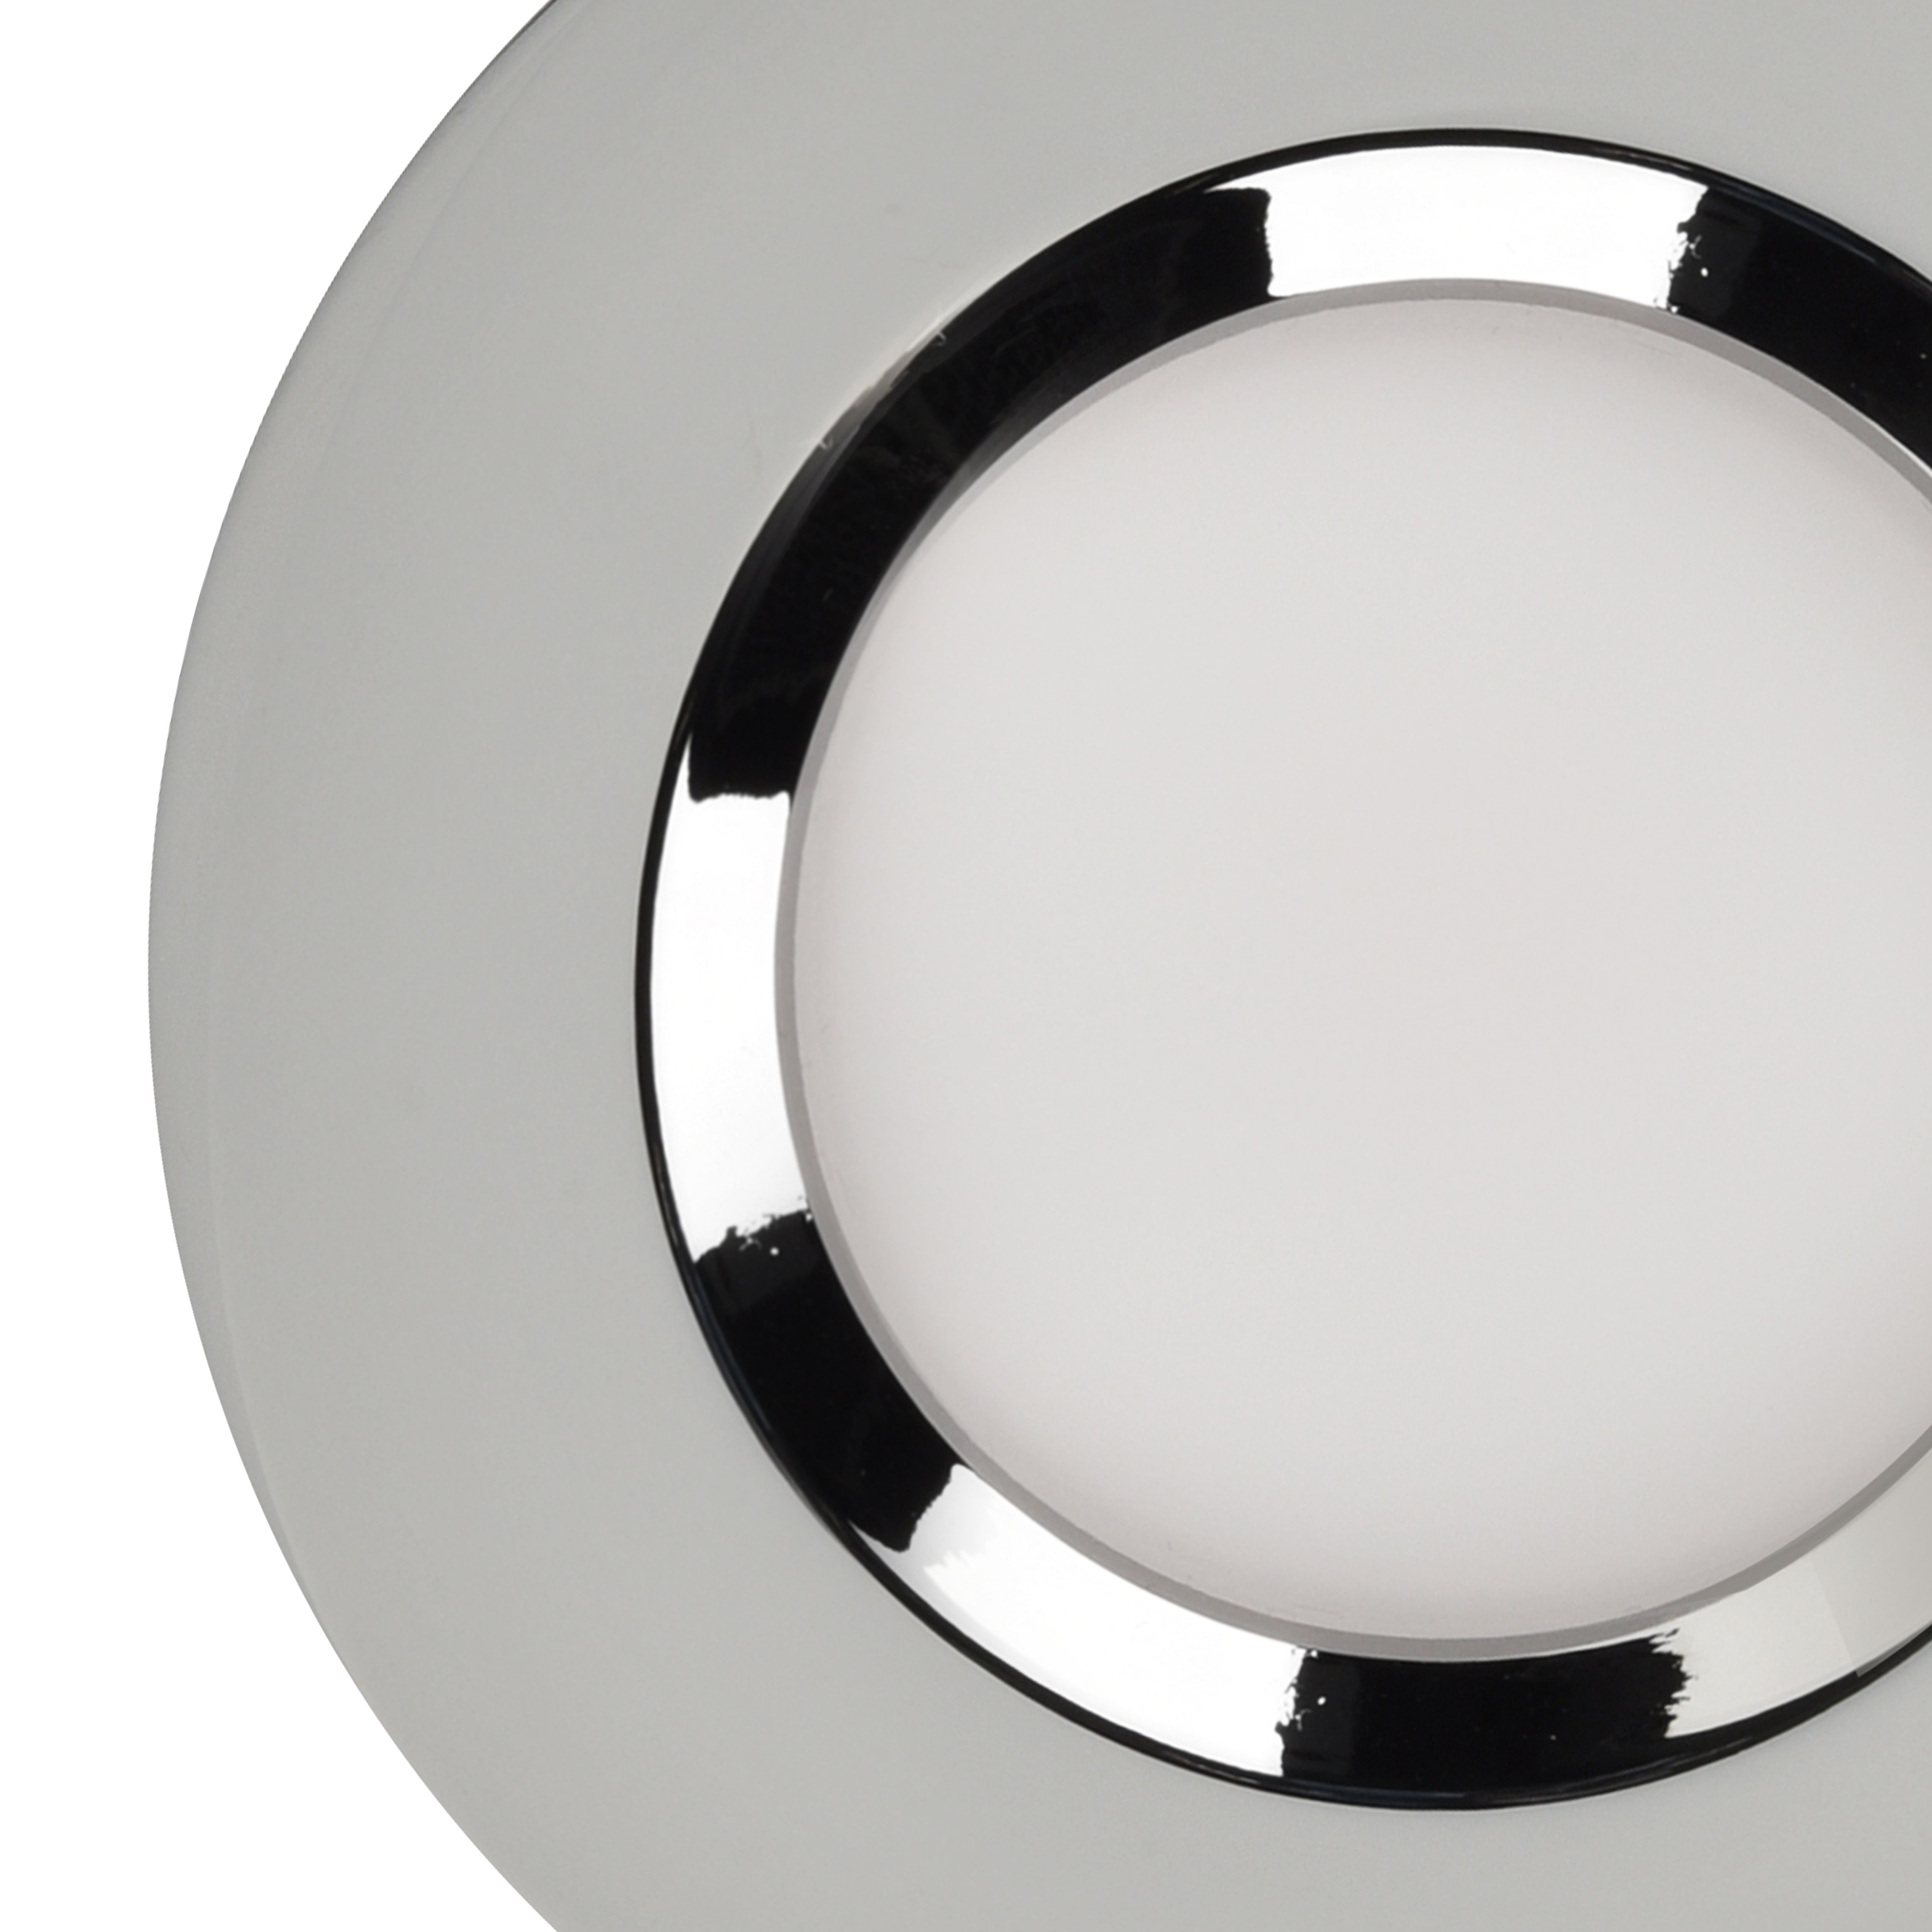 Etana Polished Chrome effect Non-adjustable LED Neutral white Downlight 4.7W IP65, Pack of 3